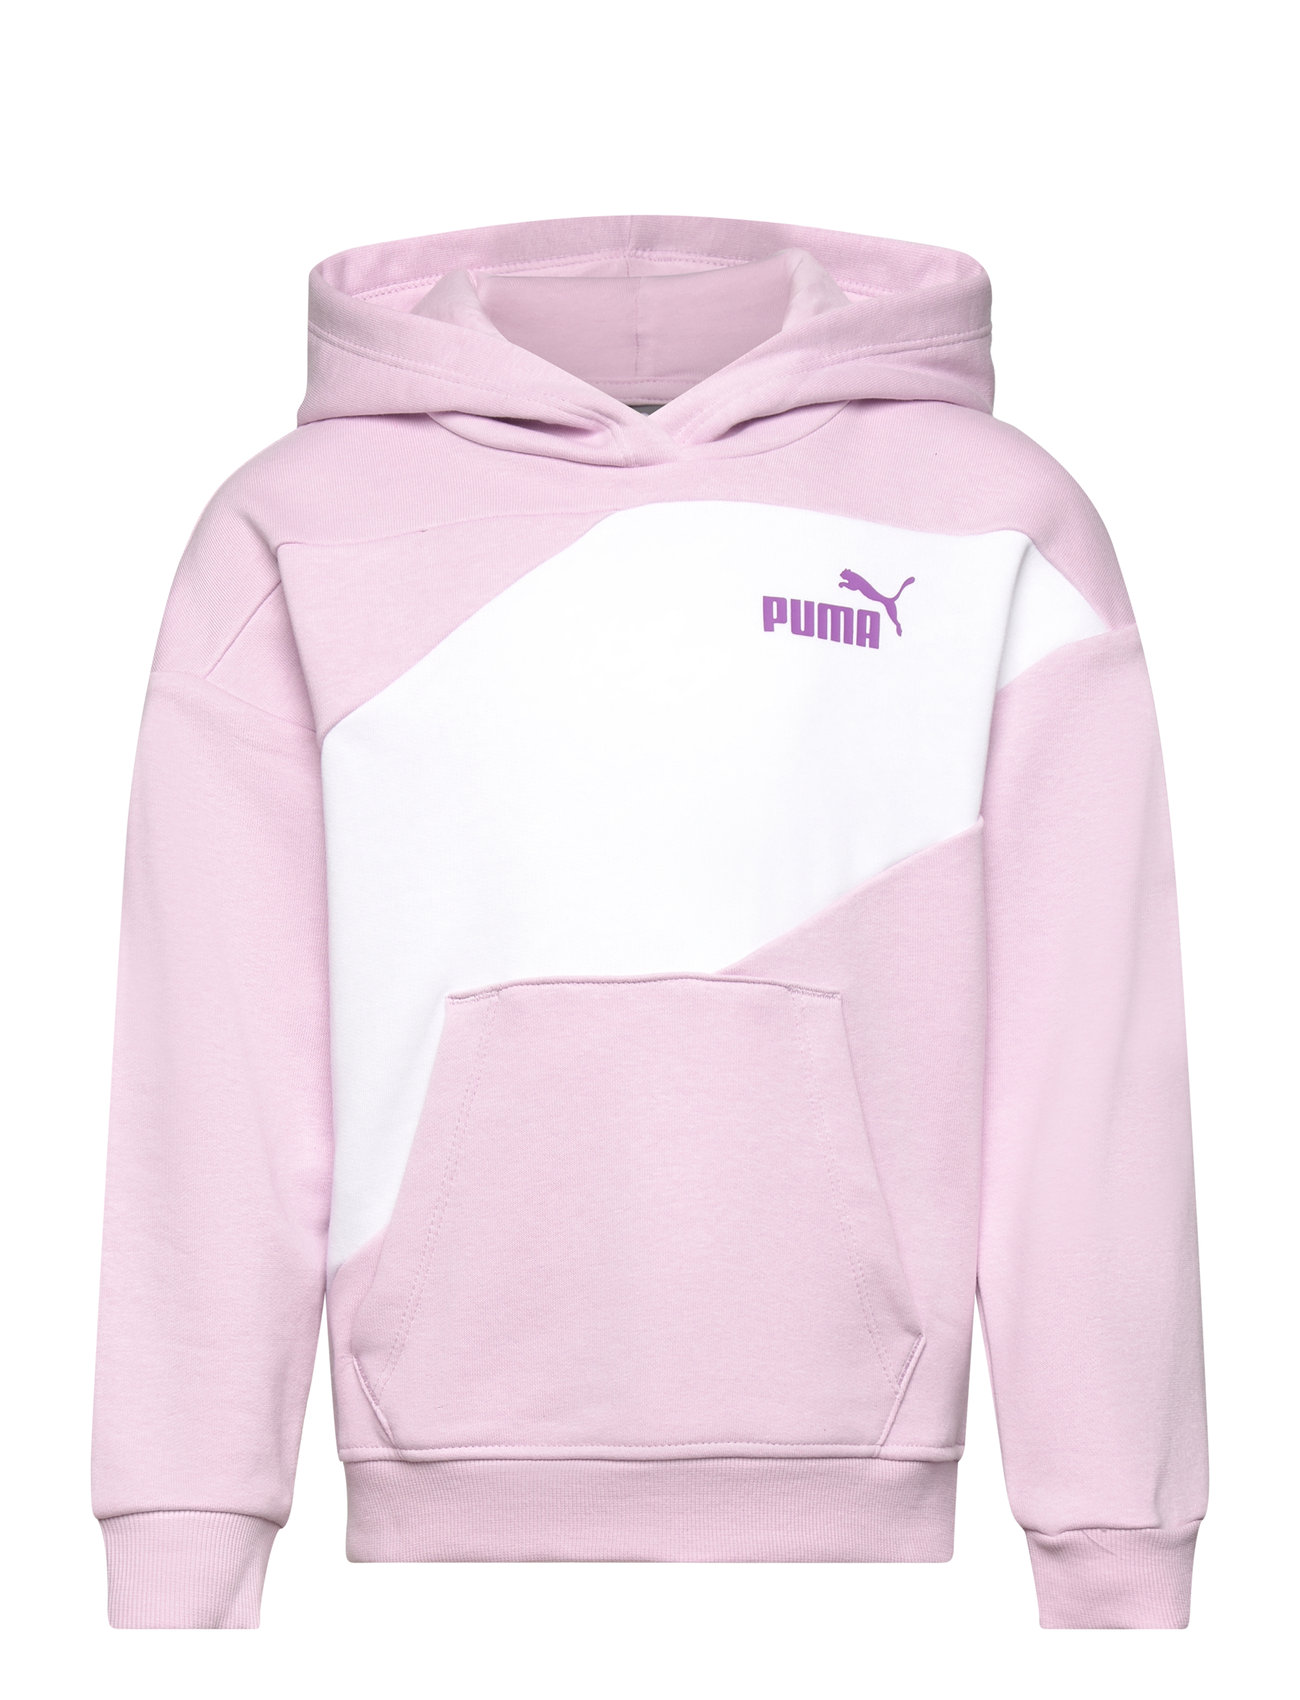 Puma Power Colorblock Hoodie Tr G Sport Sweat-shirts & Hoodies Hoodies Pink PUMA